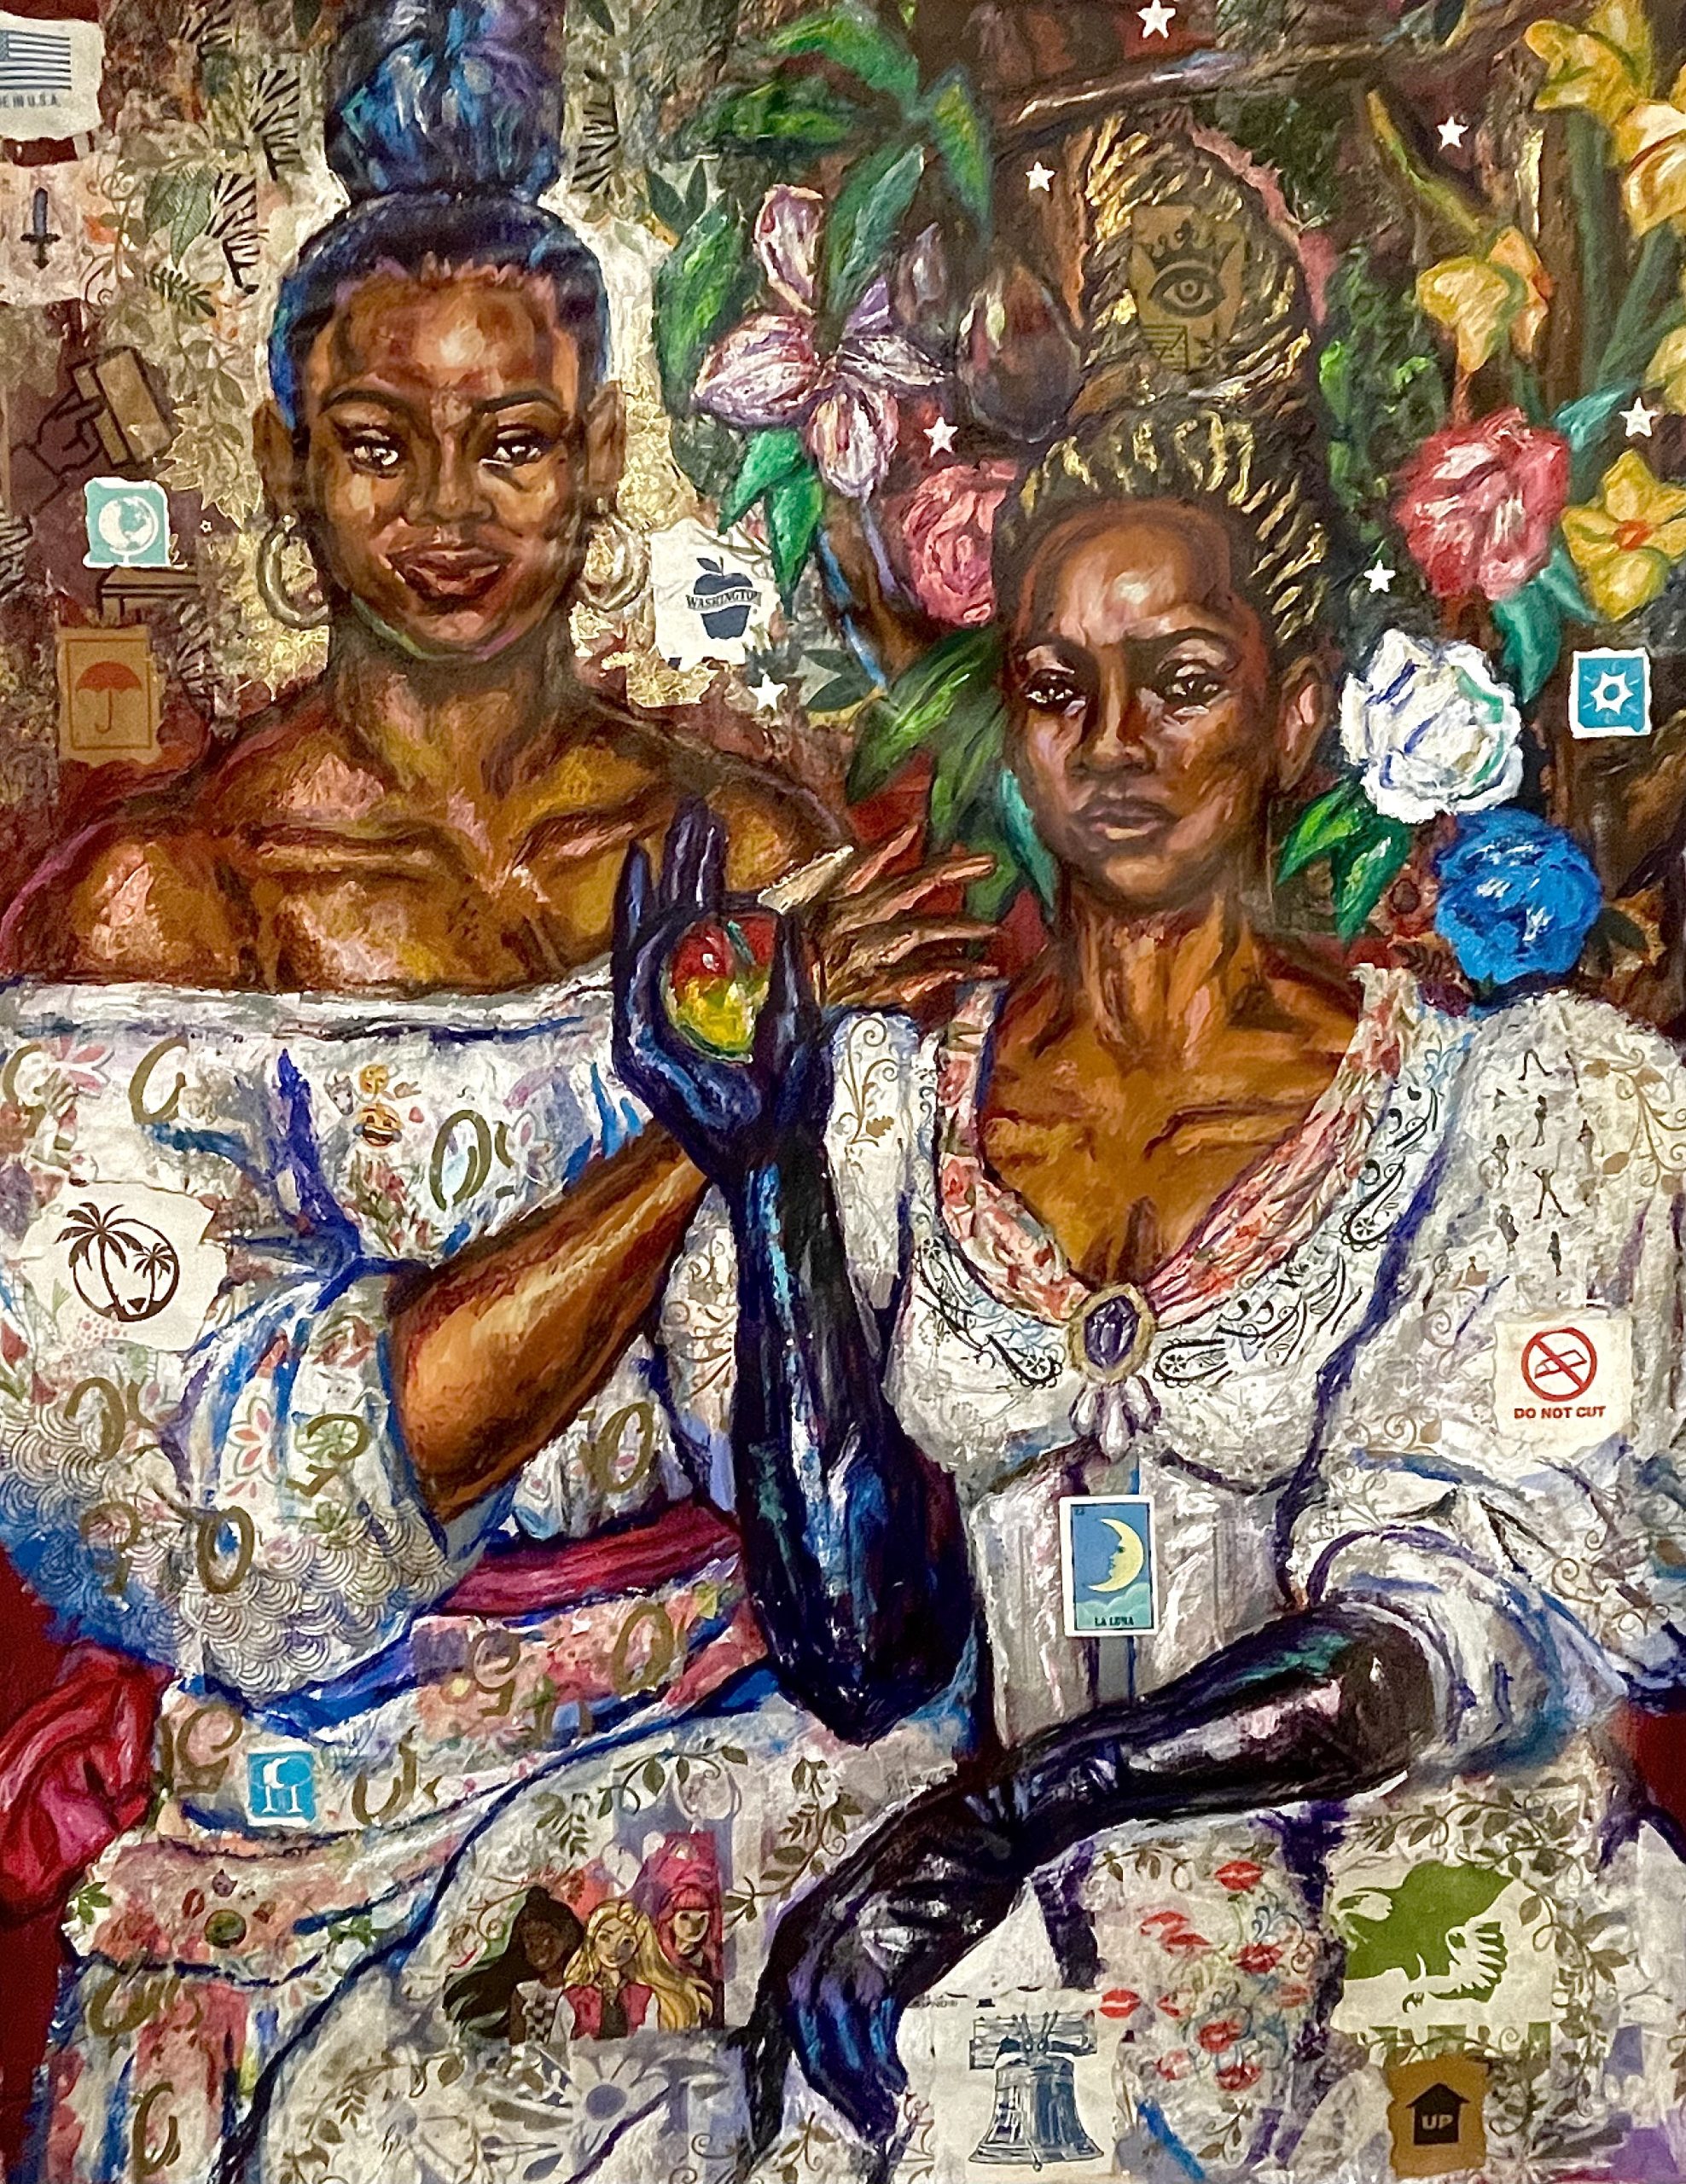 Painting by Ricardo Osmondo Francis: "Daughters of The Revolution"